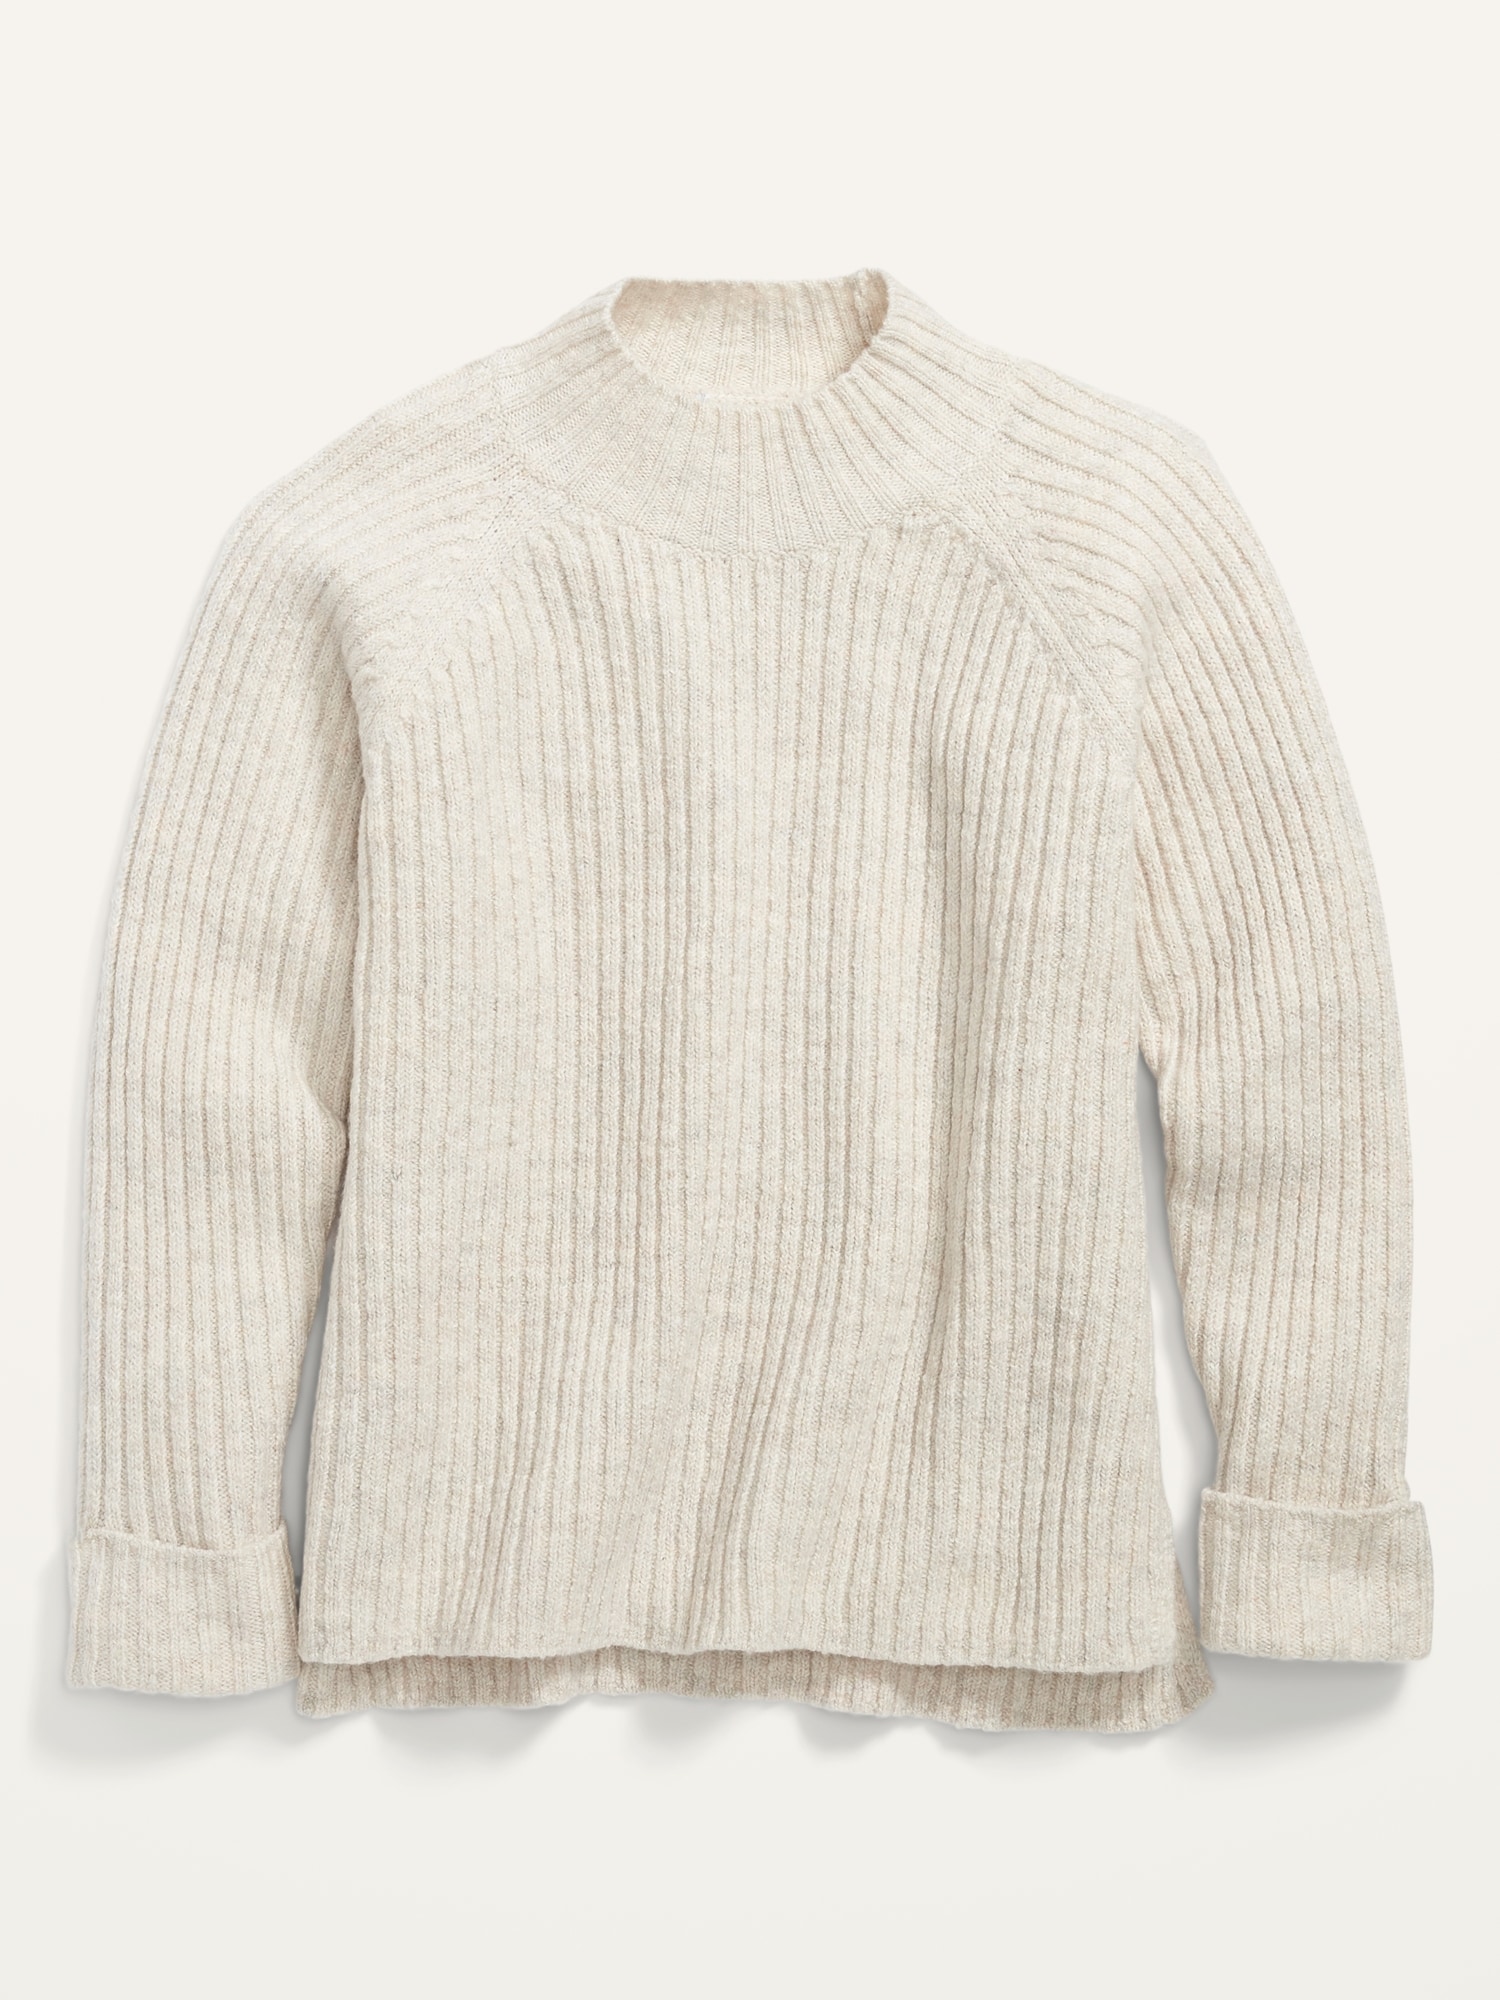 Old Navy Long-Sleeve Mock-Neck Sweater for Girls beige. 1